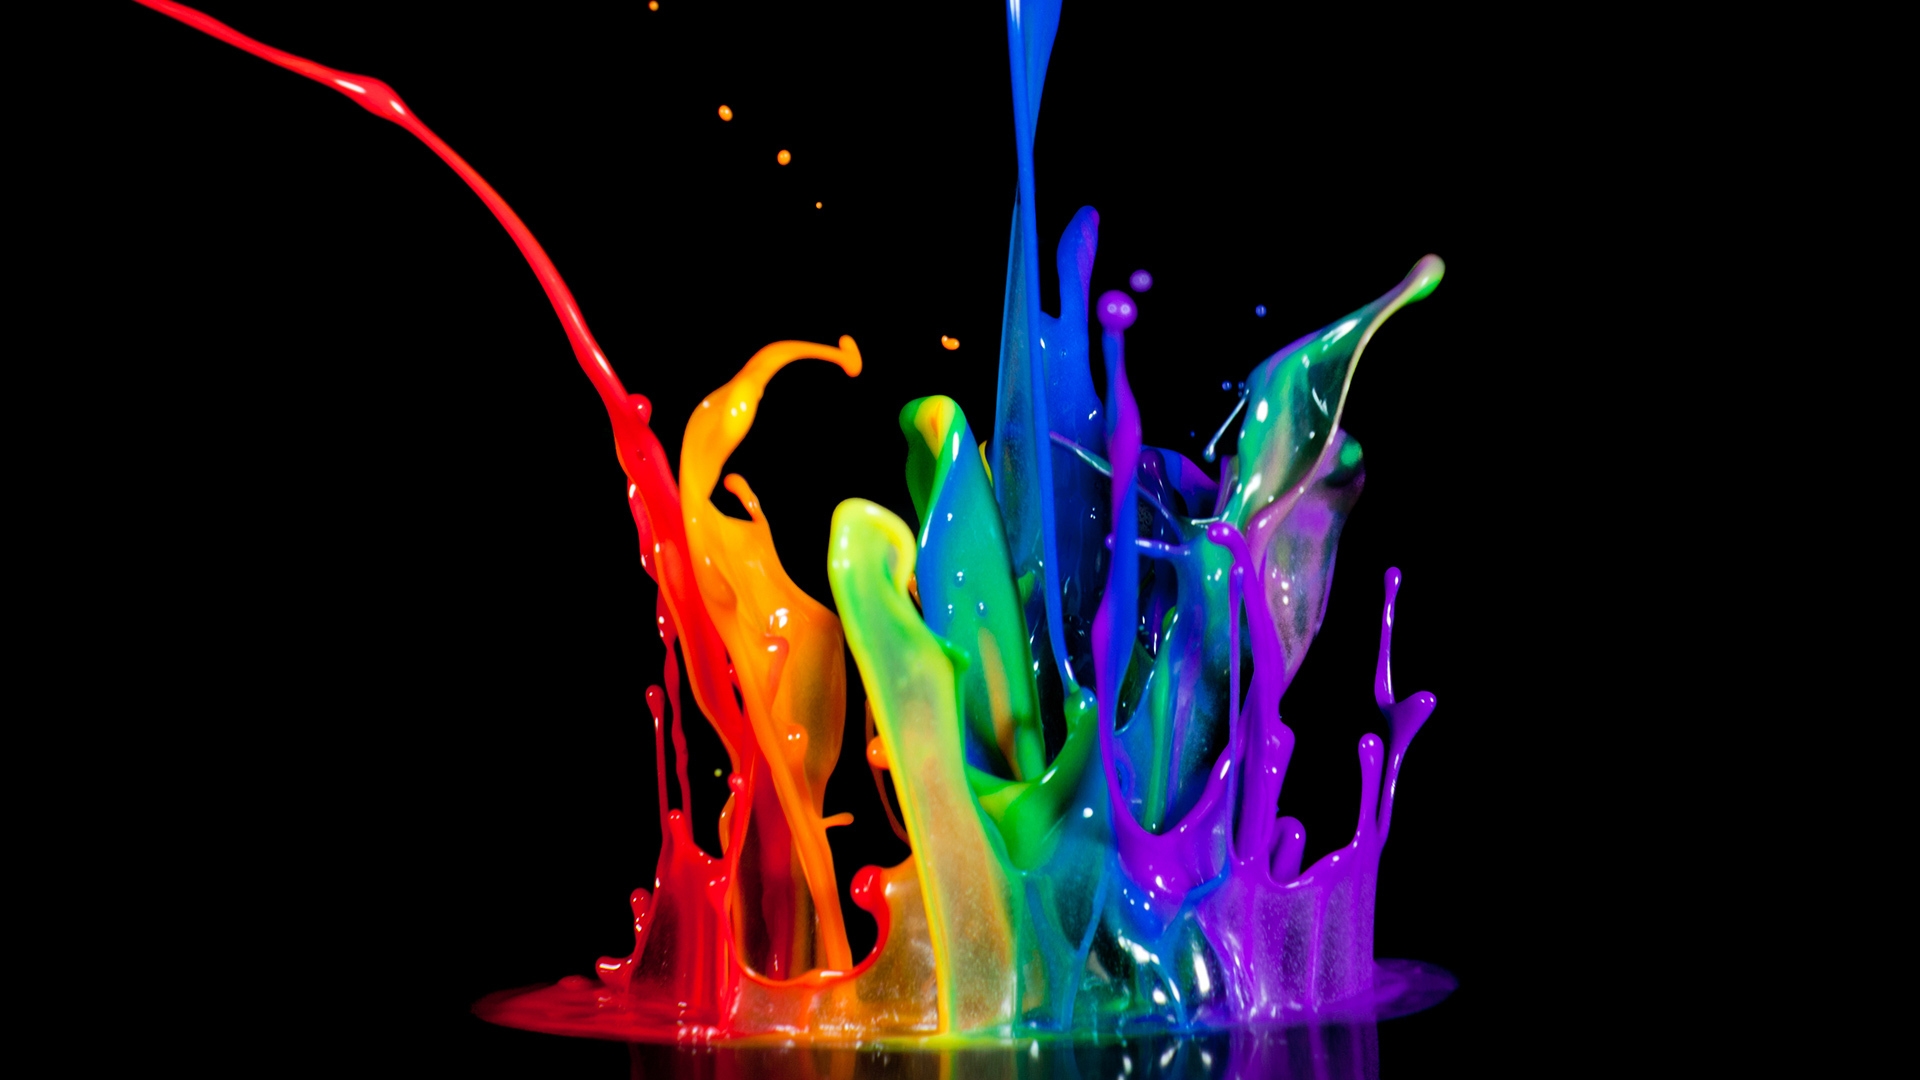 HD Wallpaper Painting Paint Splash Artistic Desktop